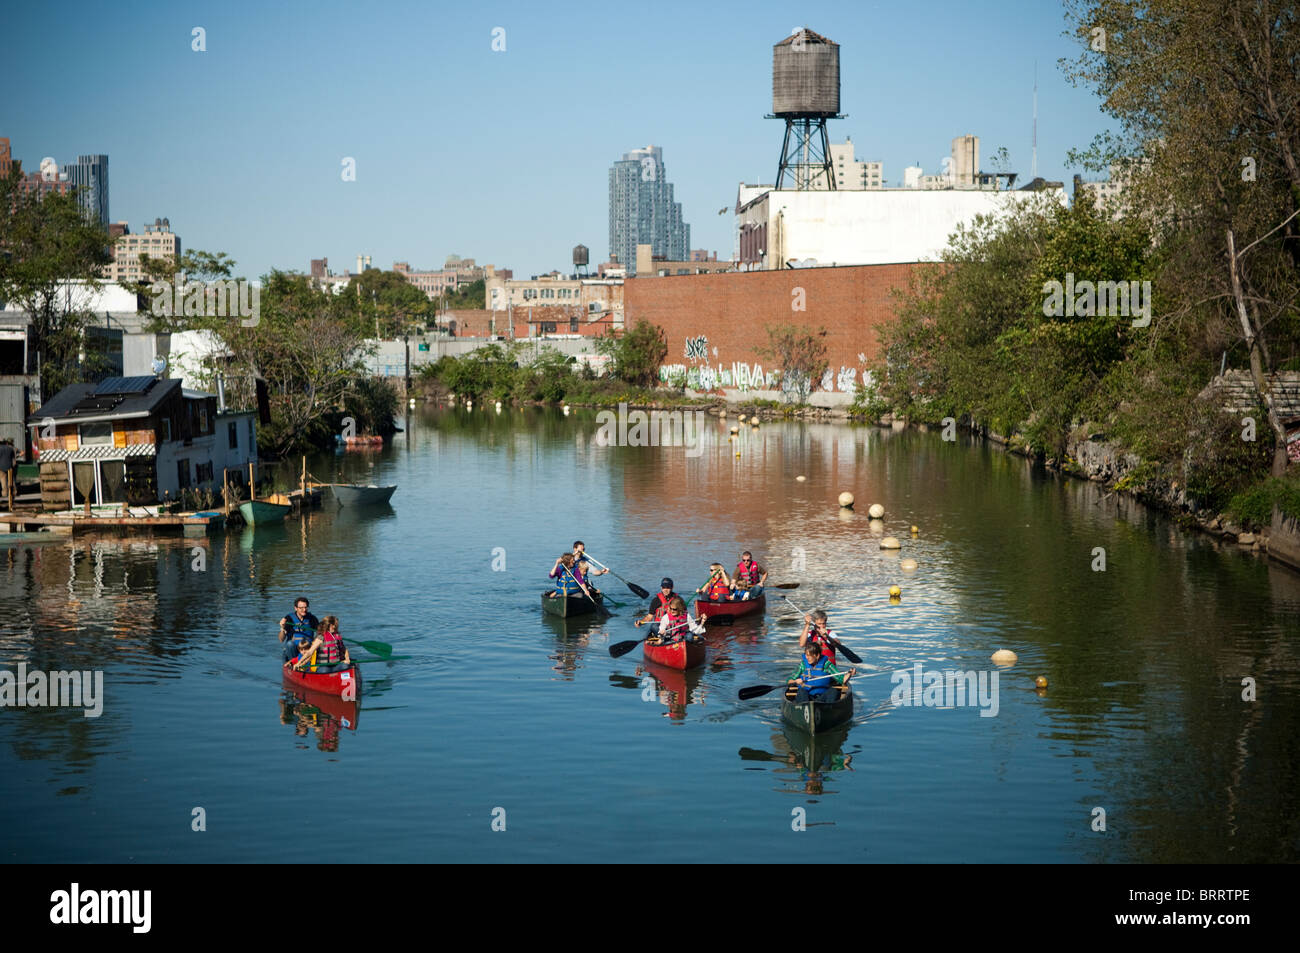 Kanufahrer paddeln verschmutzten Binnenwasserstraßen, die Gowanuskanal. in Brooklyn in New York, Stockfoto